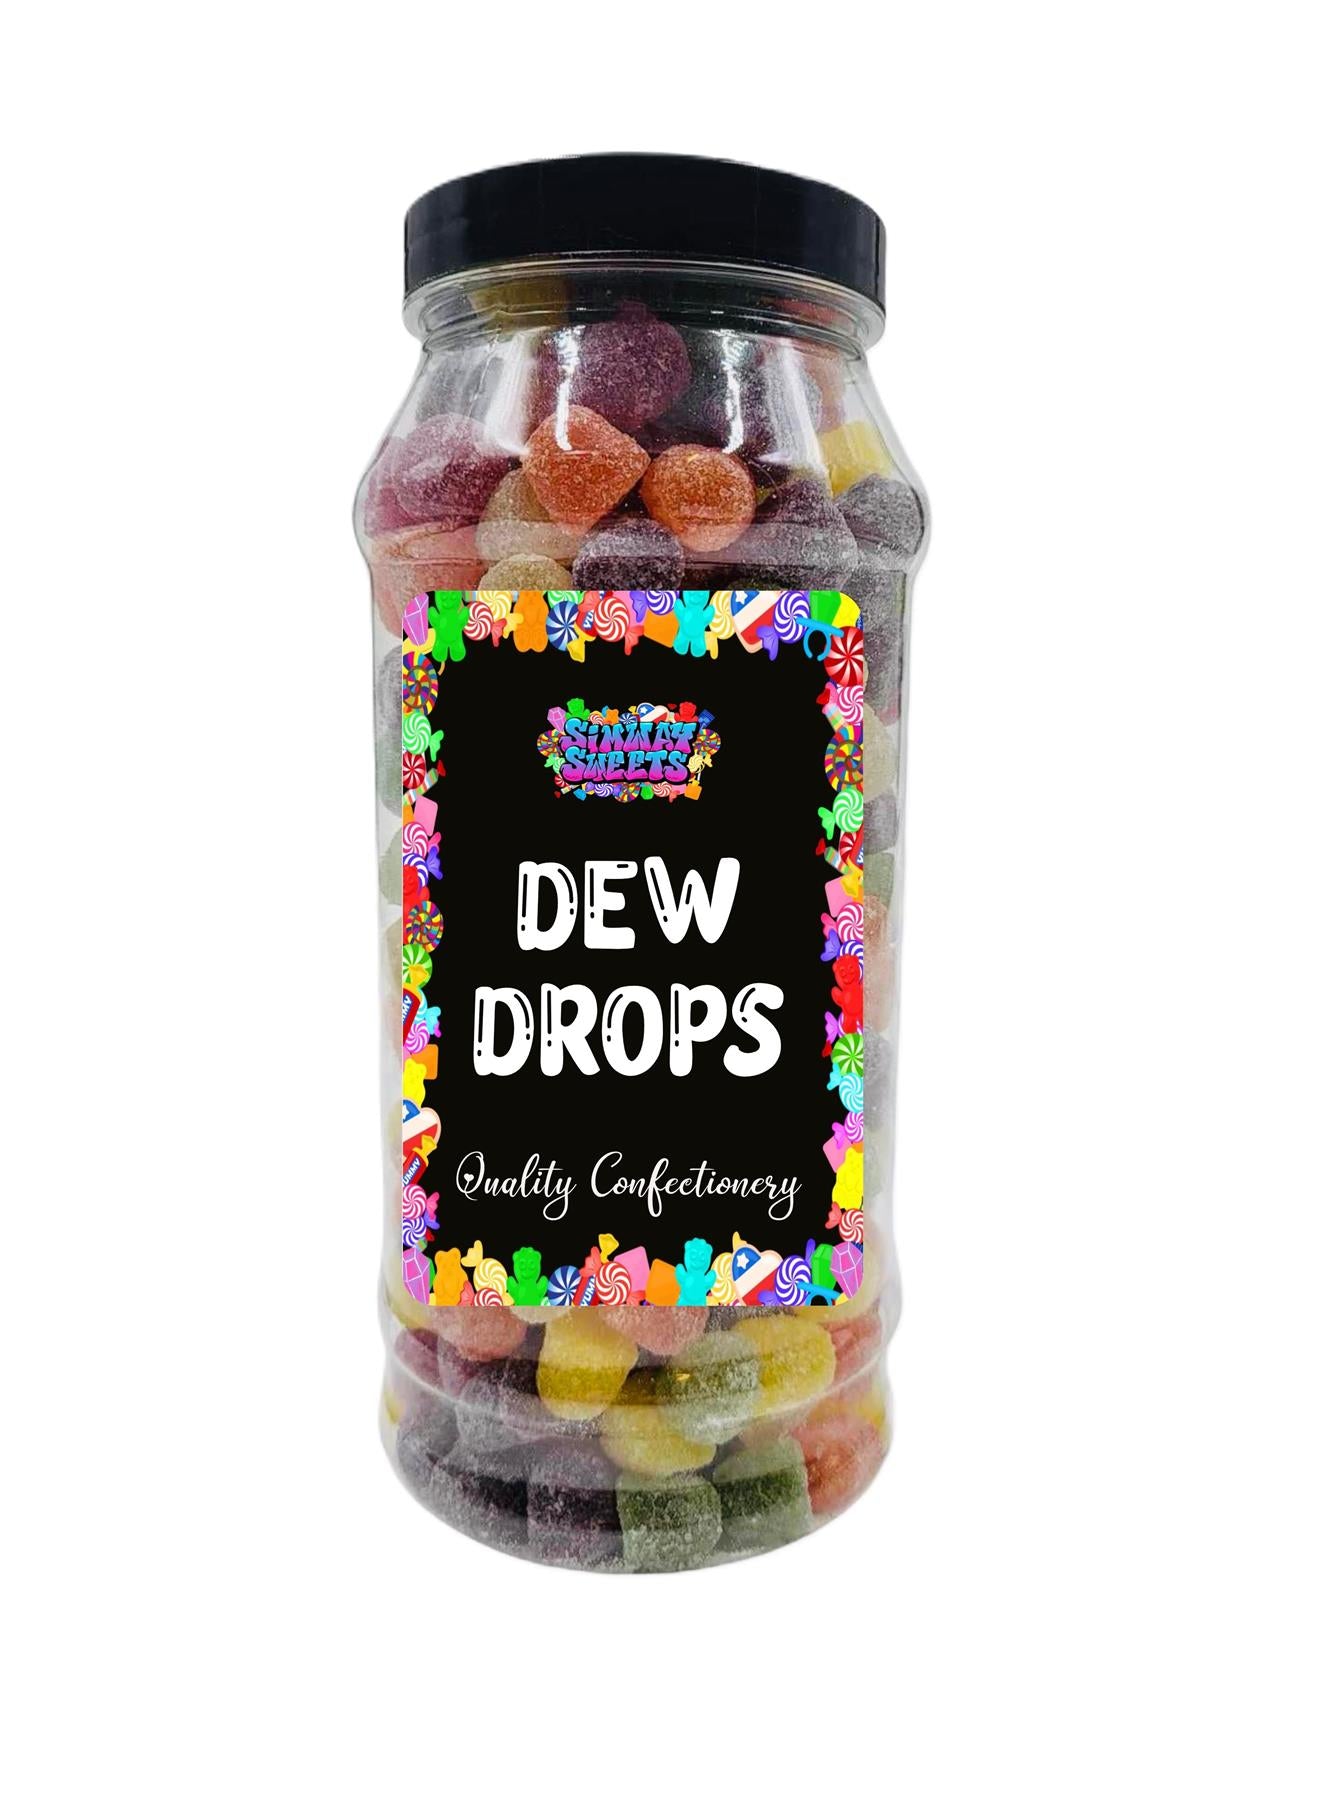 Dew Drops Fruit Flavour Gummy Retro Sweets Gift Jar - 740g